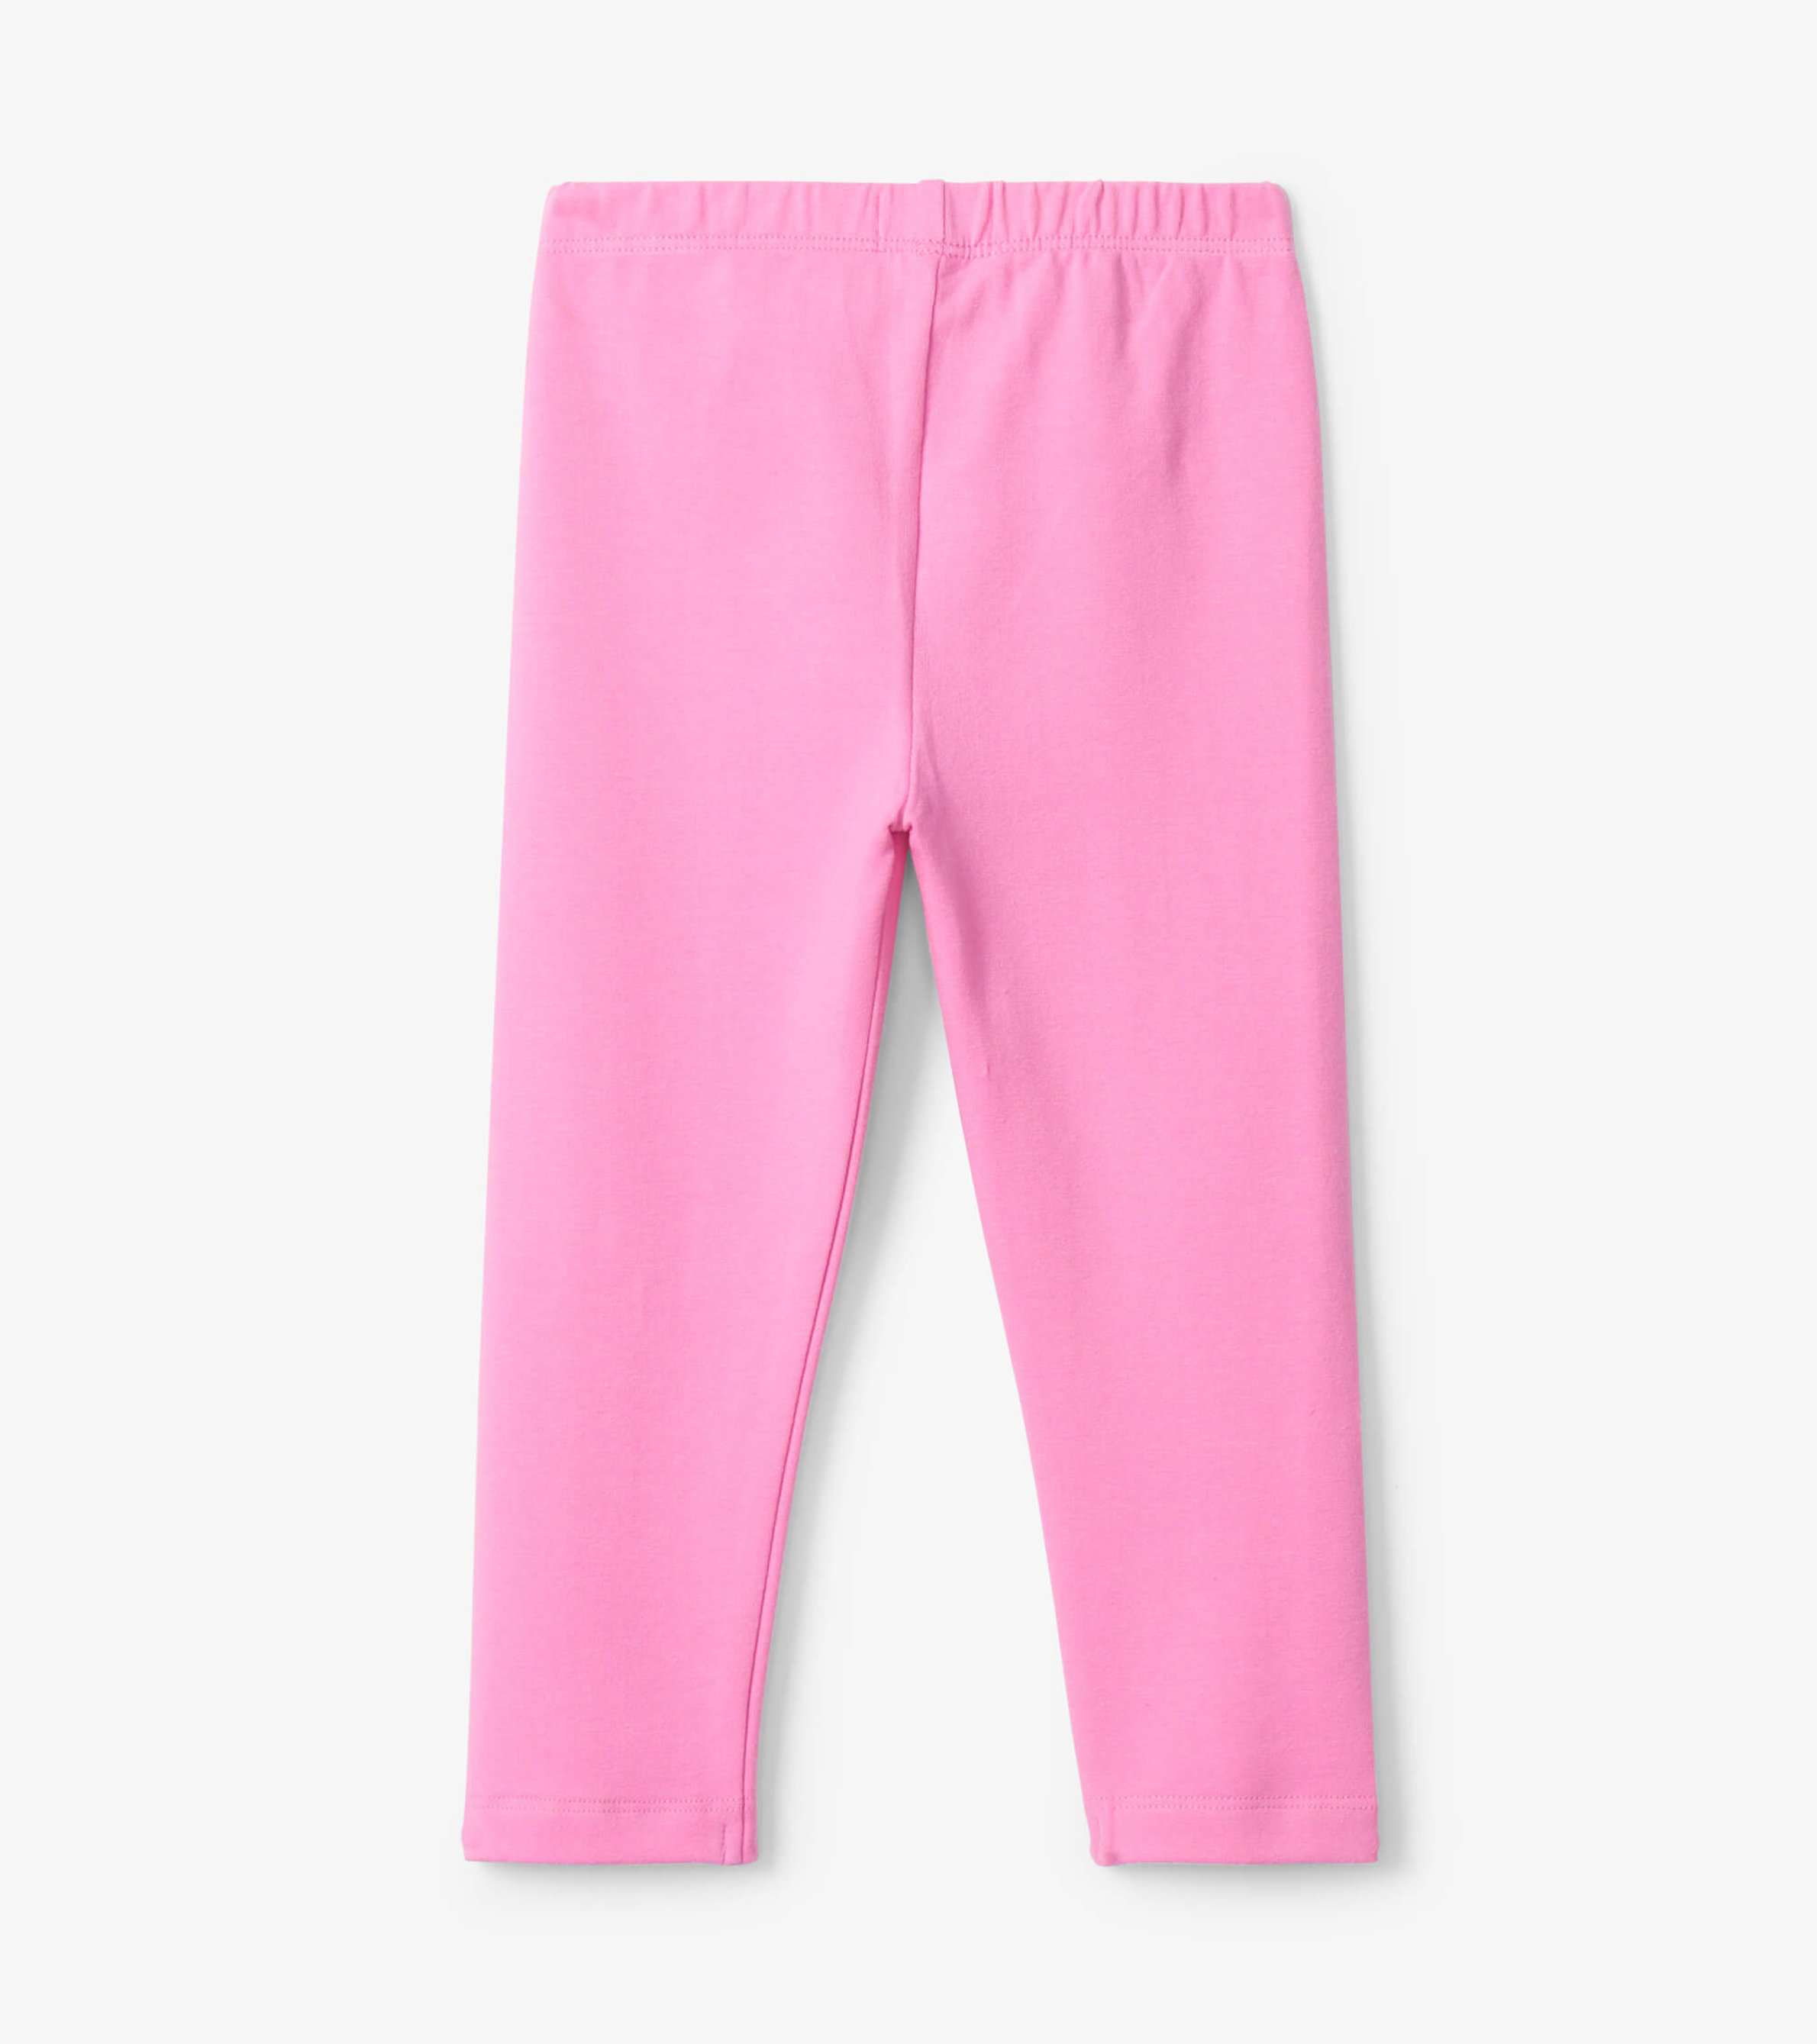 FOLIOSA Girls Leggings Light Pink Heart Tights Trousers for Kids